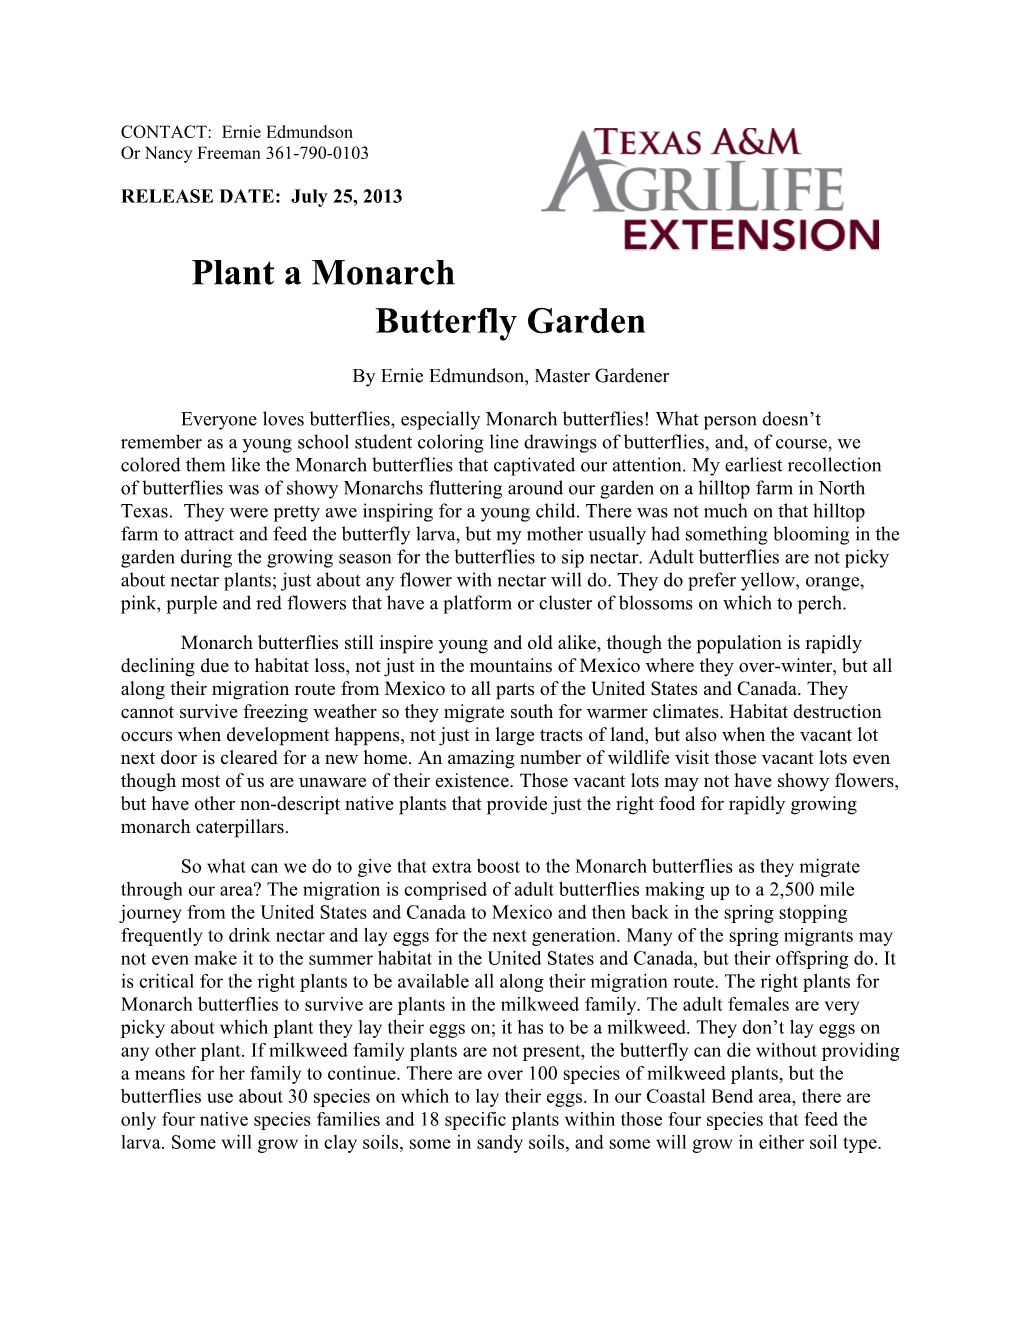 Plant a Monarch Butterfly Garden